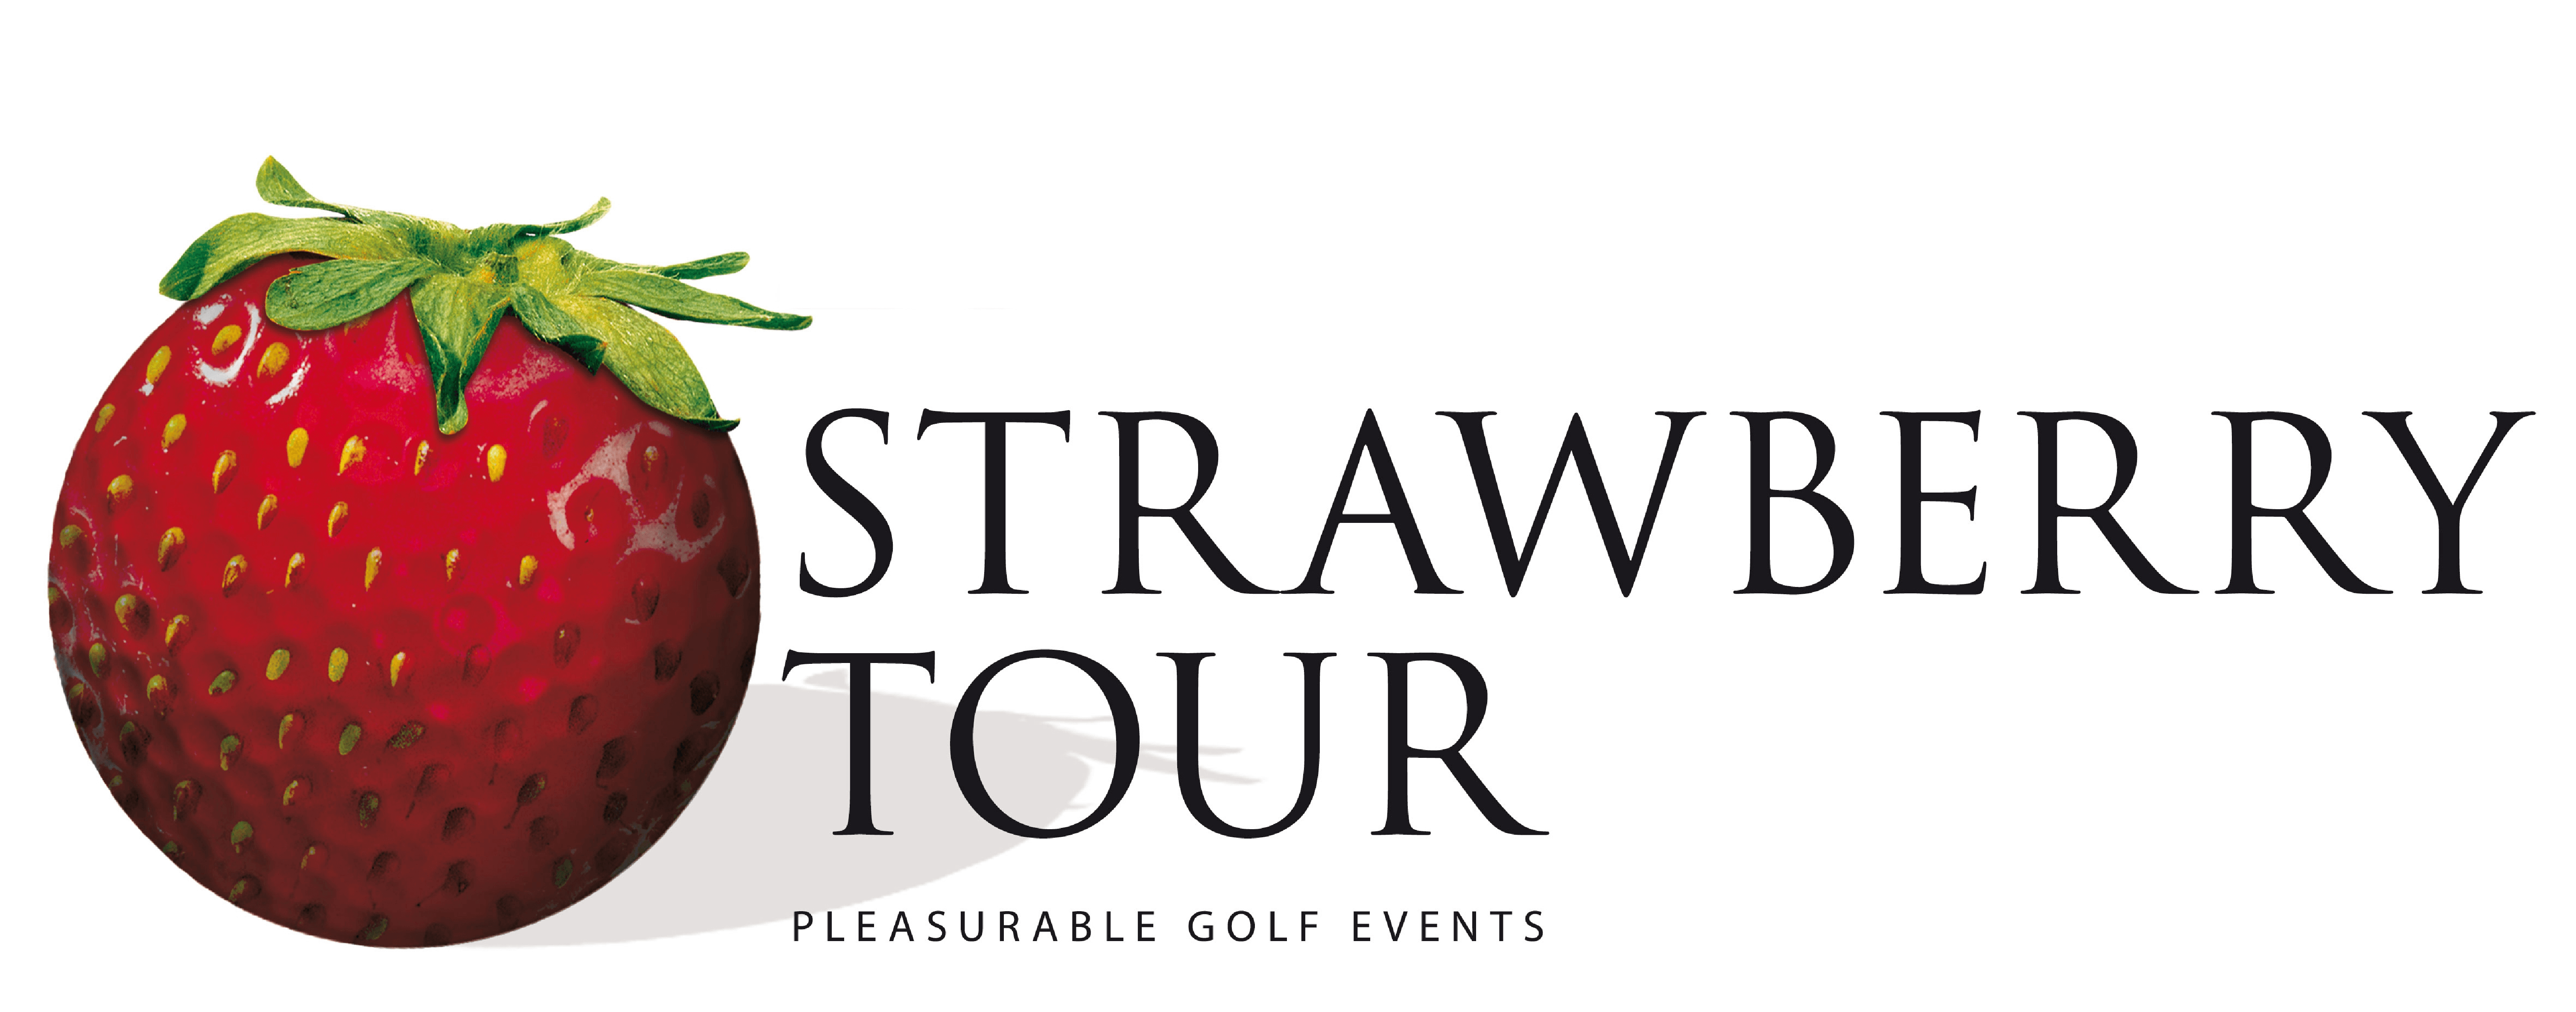 strawberry tour login